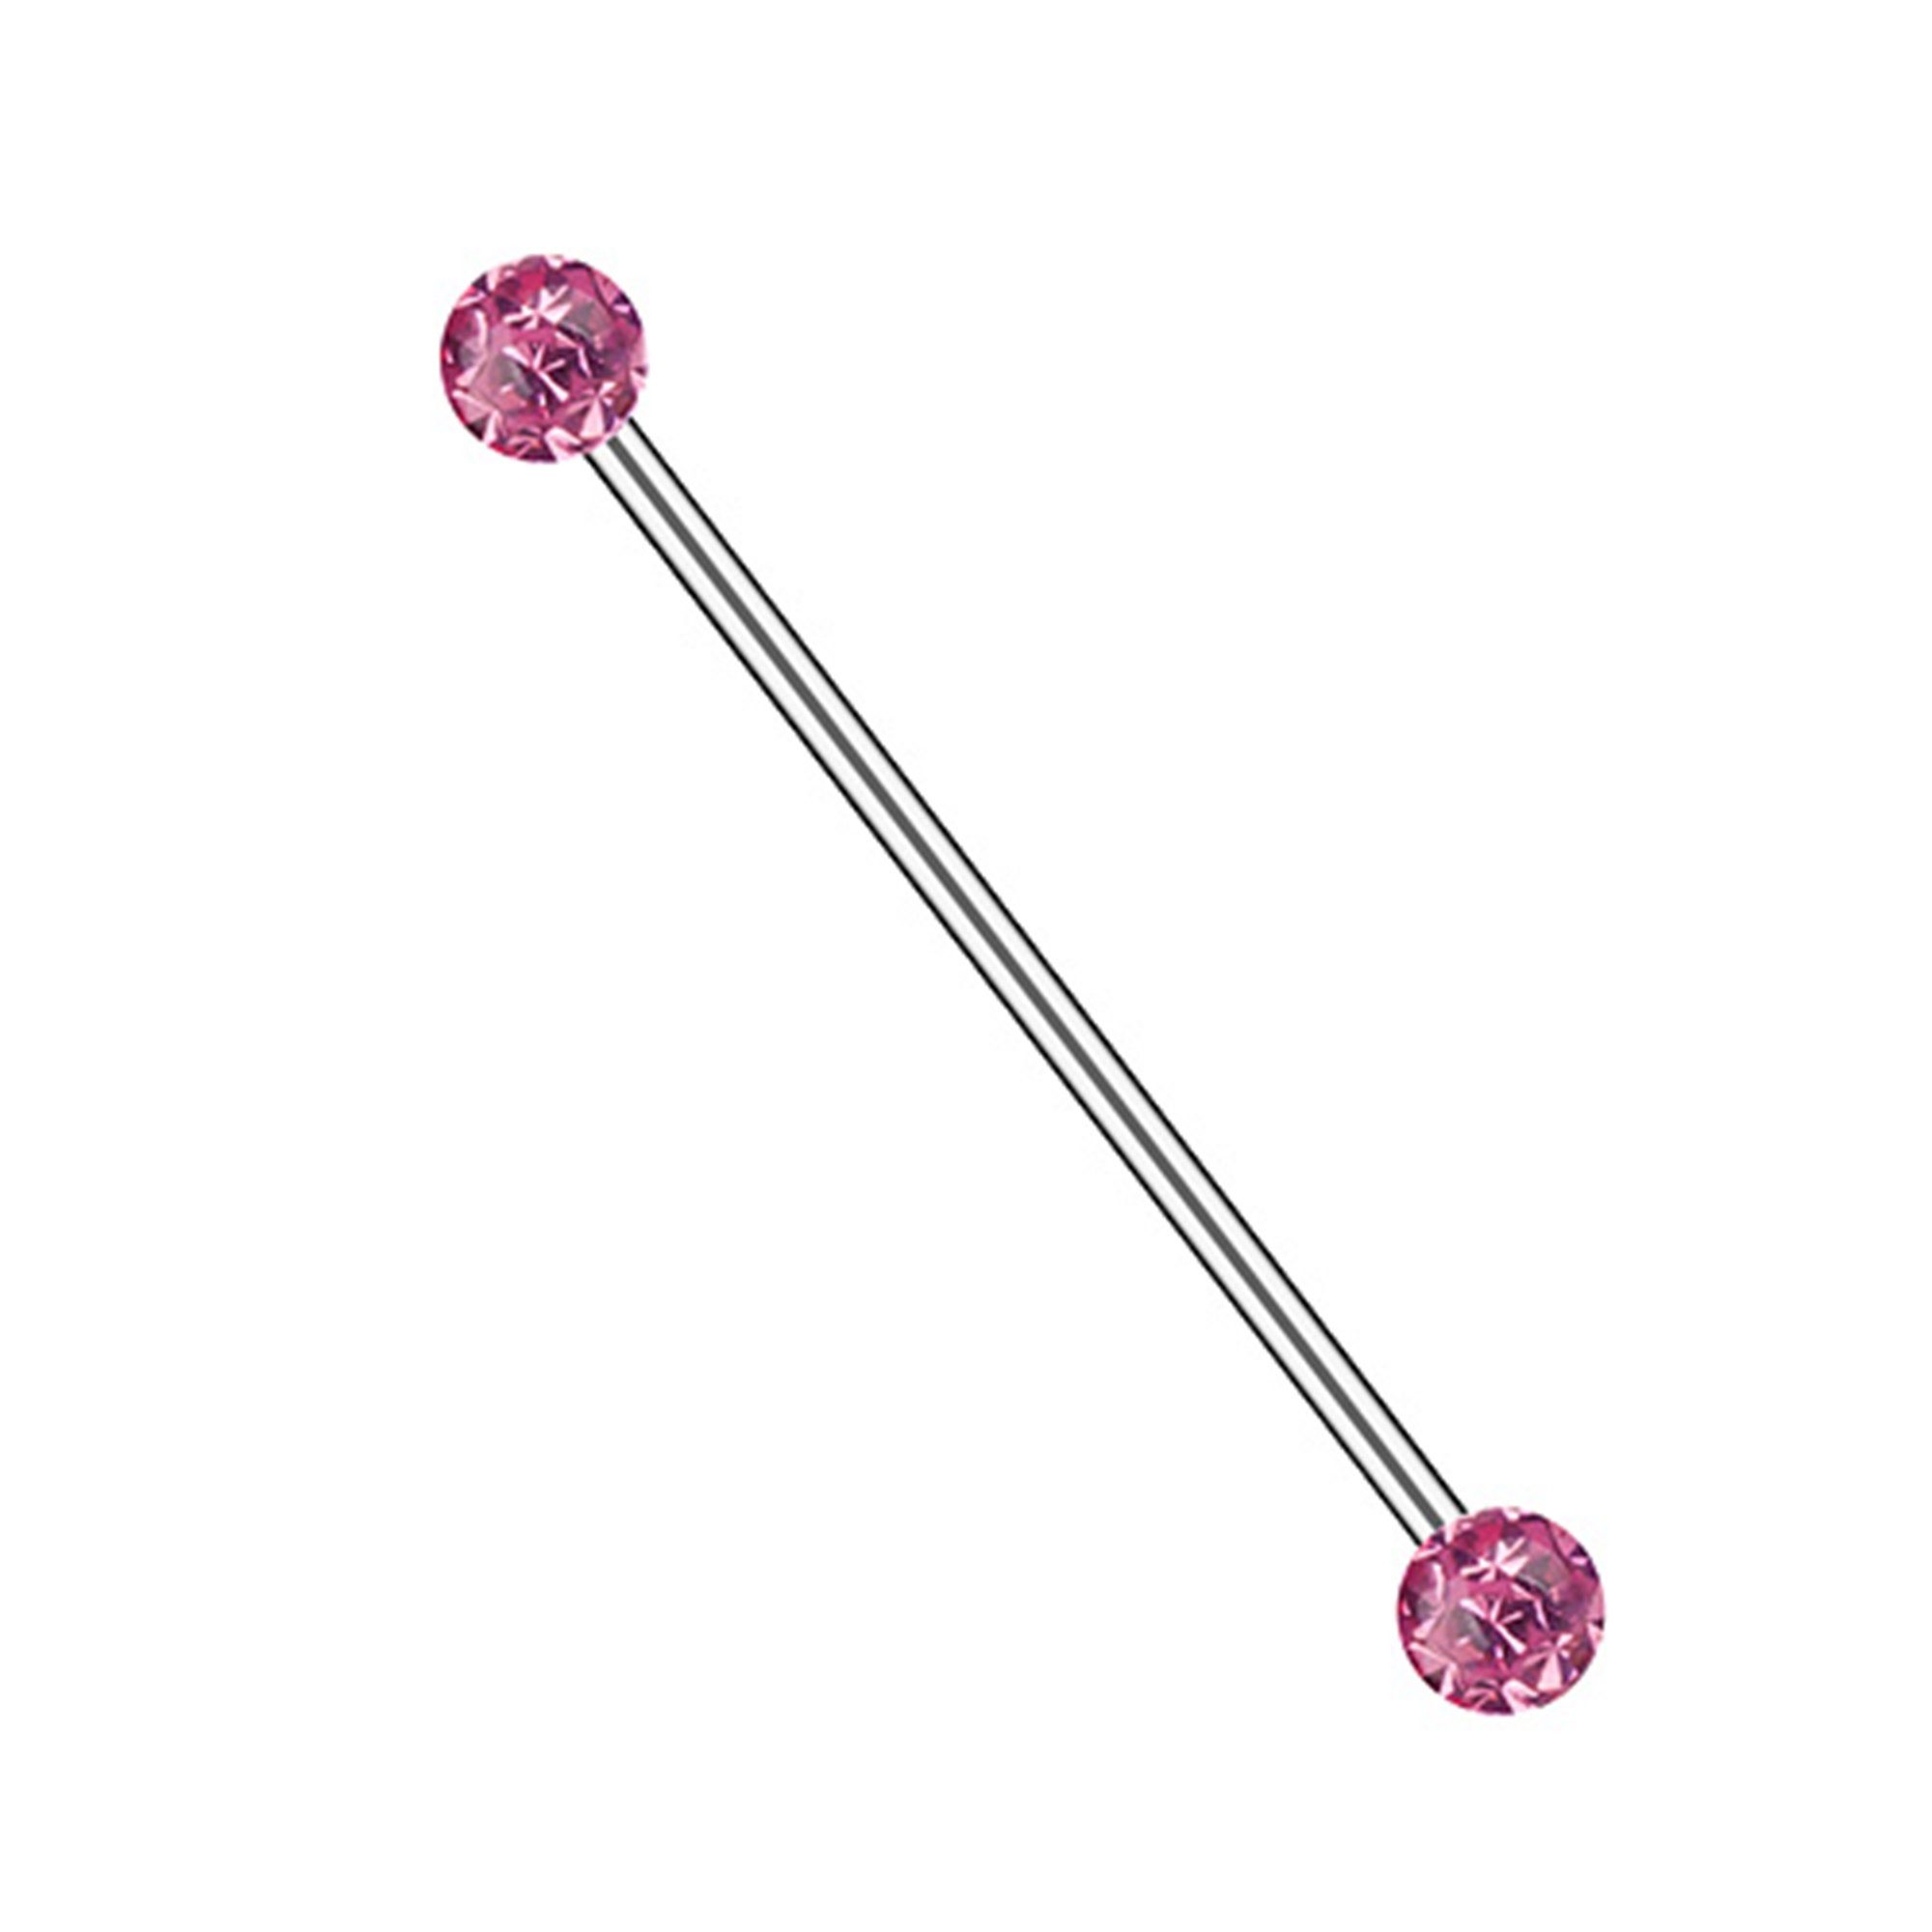 Taffstyle Piercing-Set Piercing Kristall Kugeln Industrial Intim Brust, Piercing Hantel Barbell Ohr Cartilage Helix Tragus Stab Ohrpiercing Pink